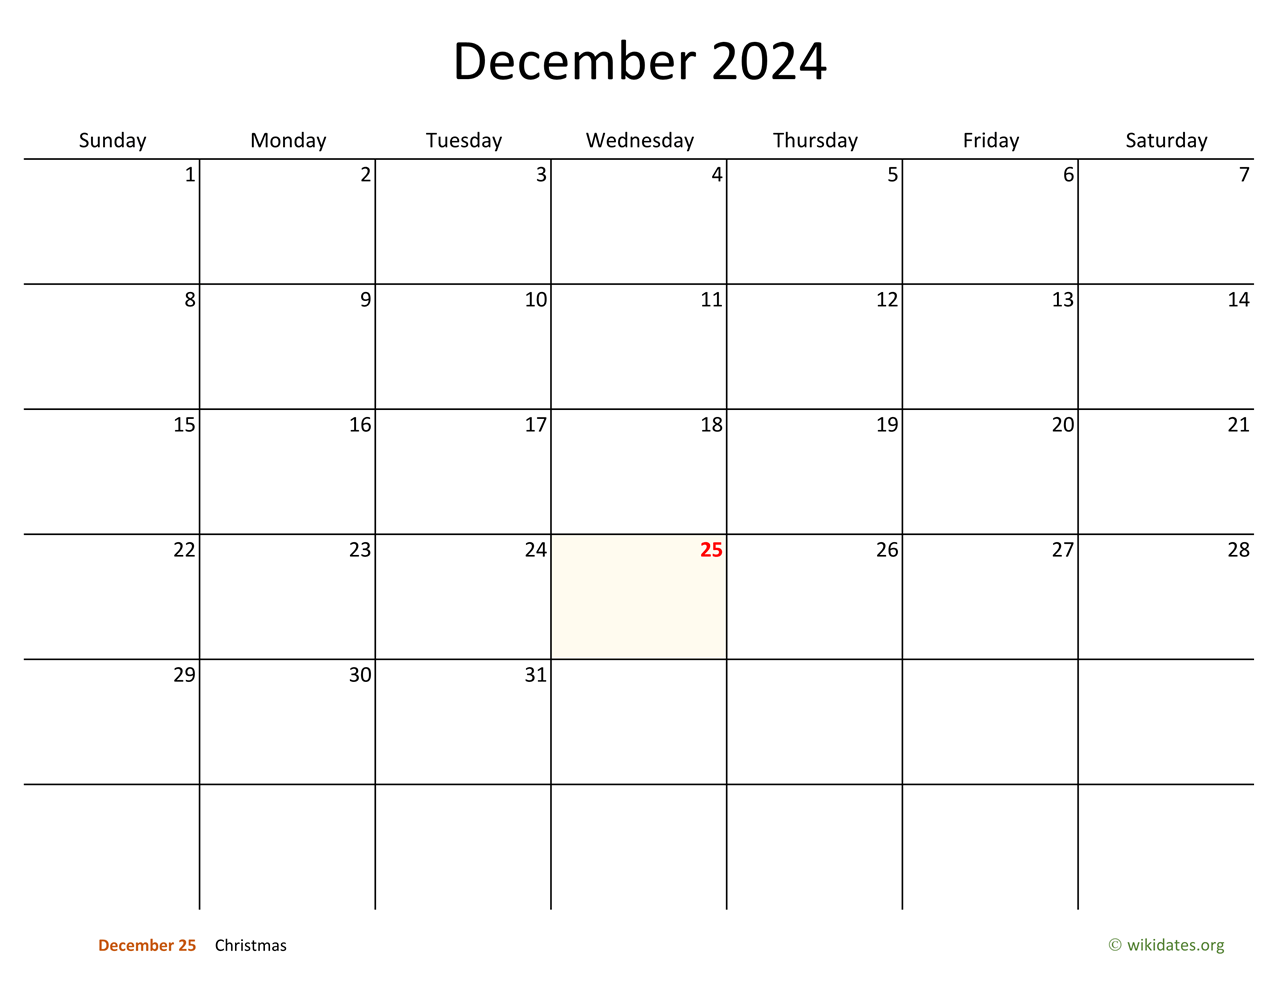 December 2024 Calendar with Bigger boxes